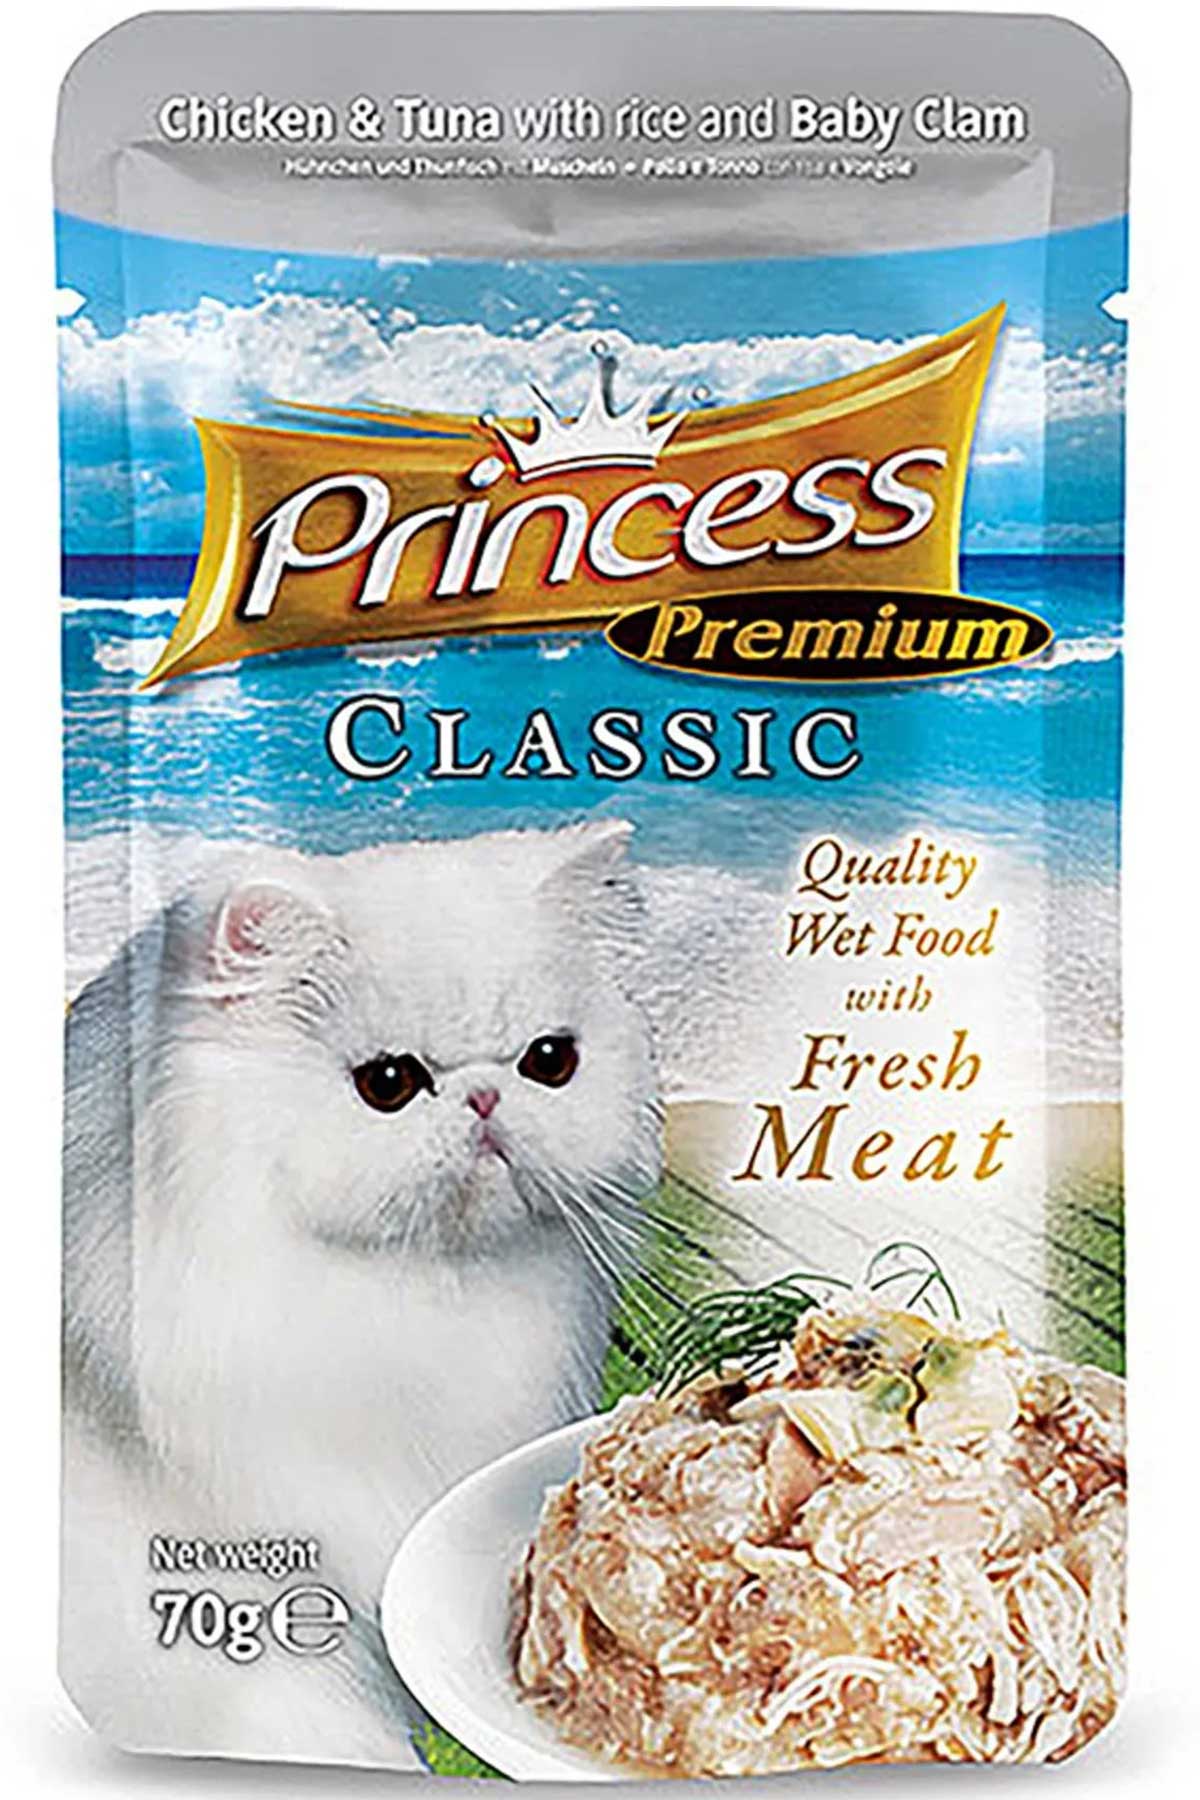 Princess Classic Gold Pouch Tavuklu Ton Balıklı İstiridyeli ve Pirinçli Yetişkin Kedi Konservesi 70gr